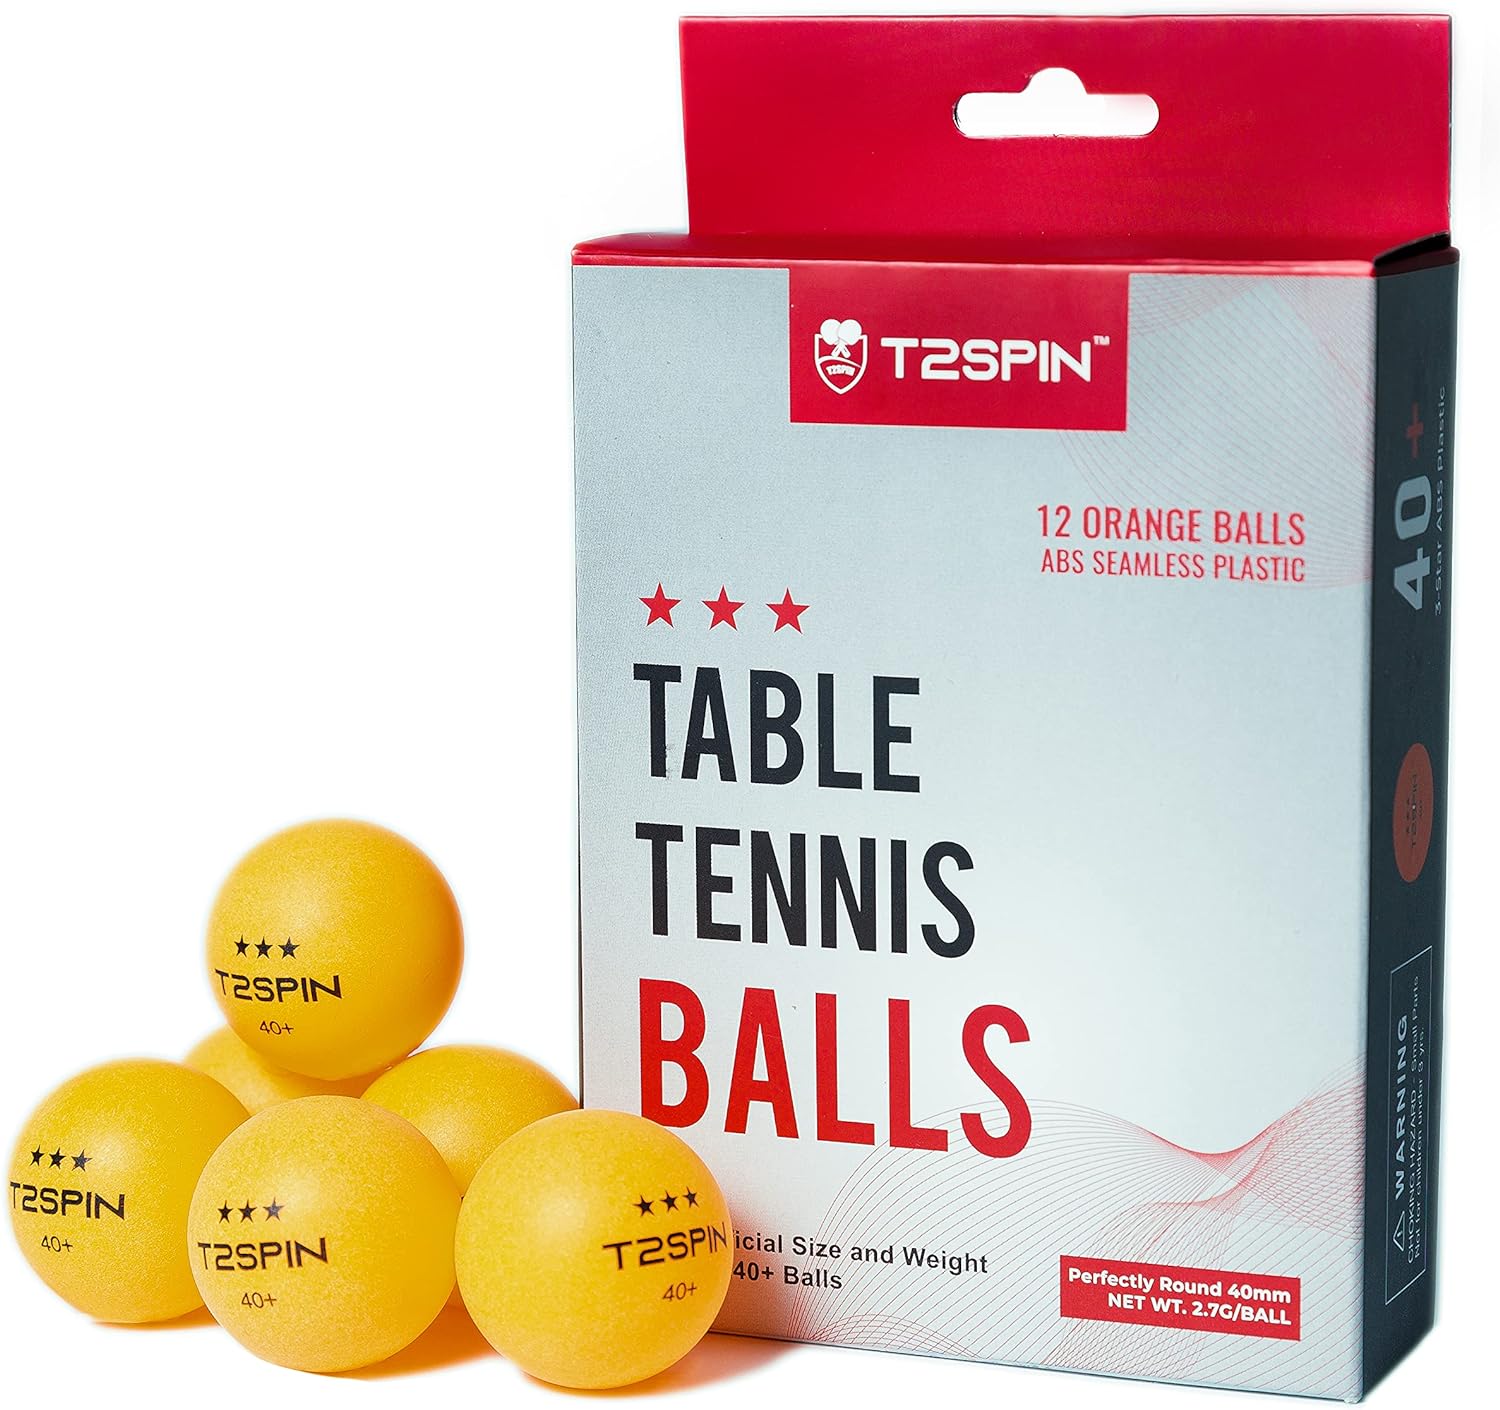 MZY1188 150pcs/Bag Ping Pong Balls Sports Table Tennis Ball 40mm Diameter Ping Pong Balls For Training